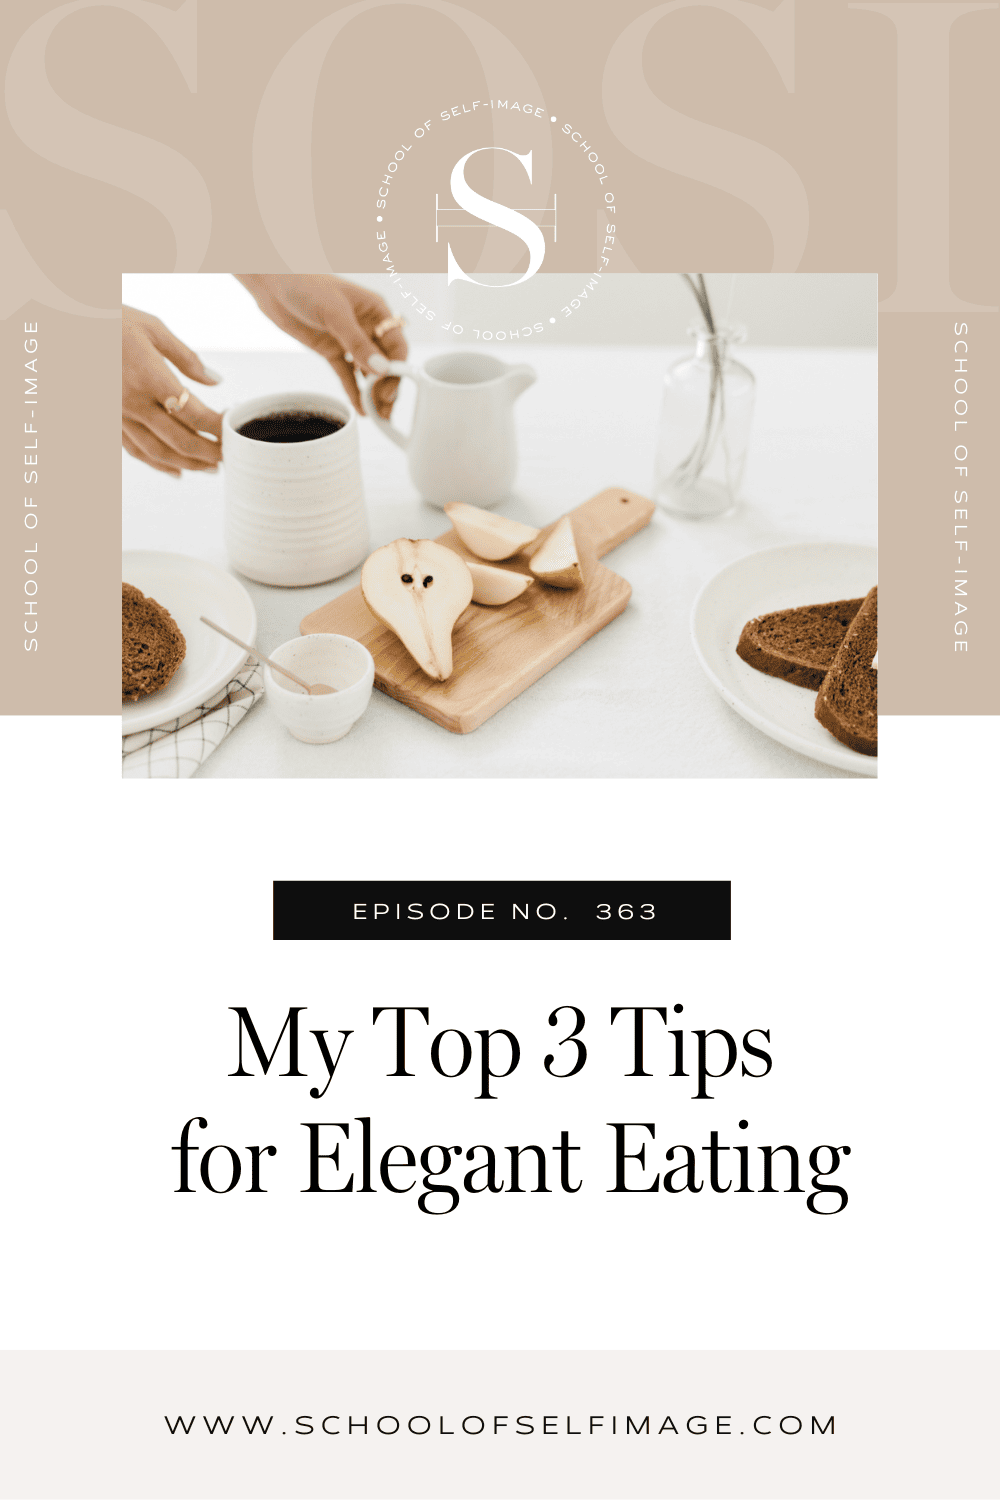 My Top 3 Tips for Elegant Eating